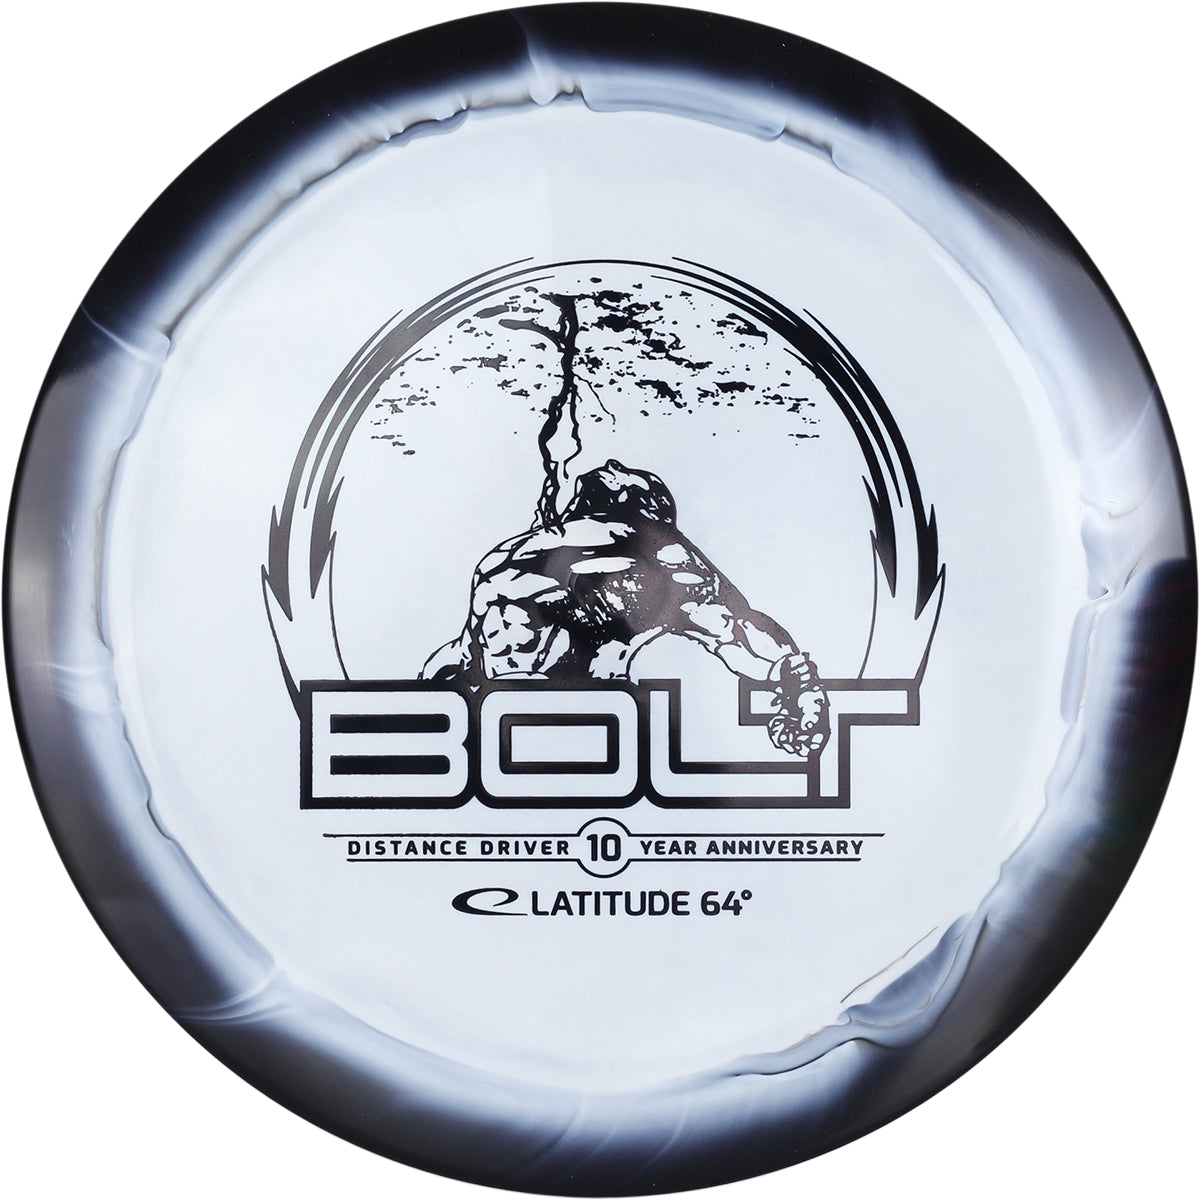 Gold Orbit Bolt 10th Anniversary